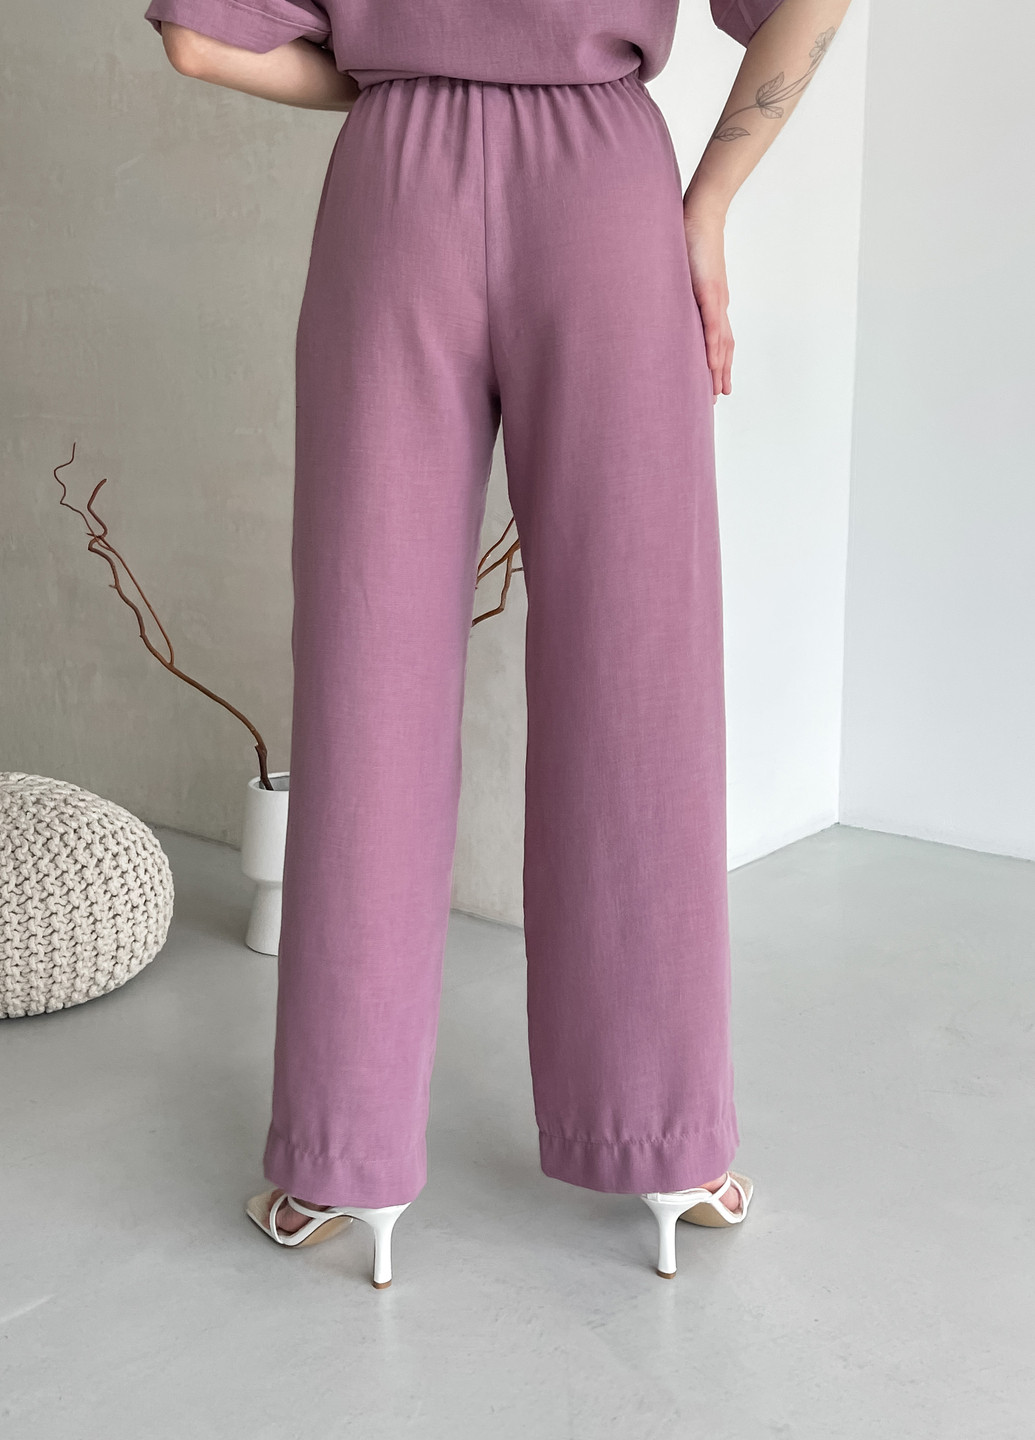 Женские брюки клеш от бедра из льна розовые 600000144 Merlini палуцца (258280321)